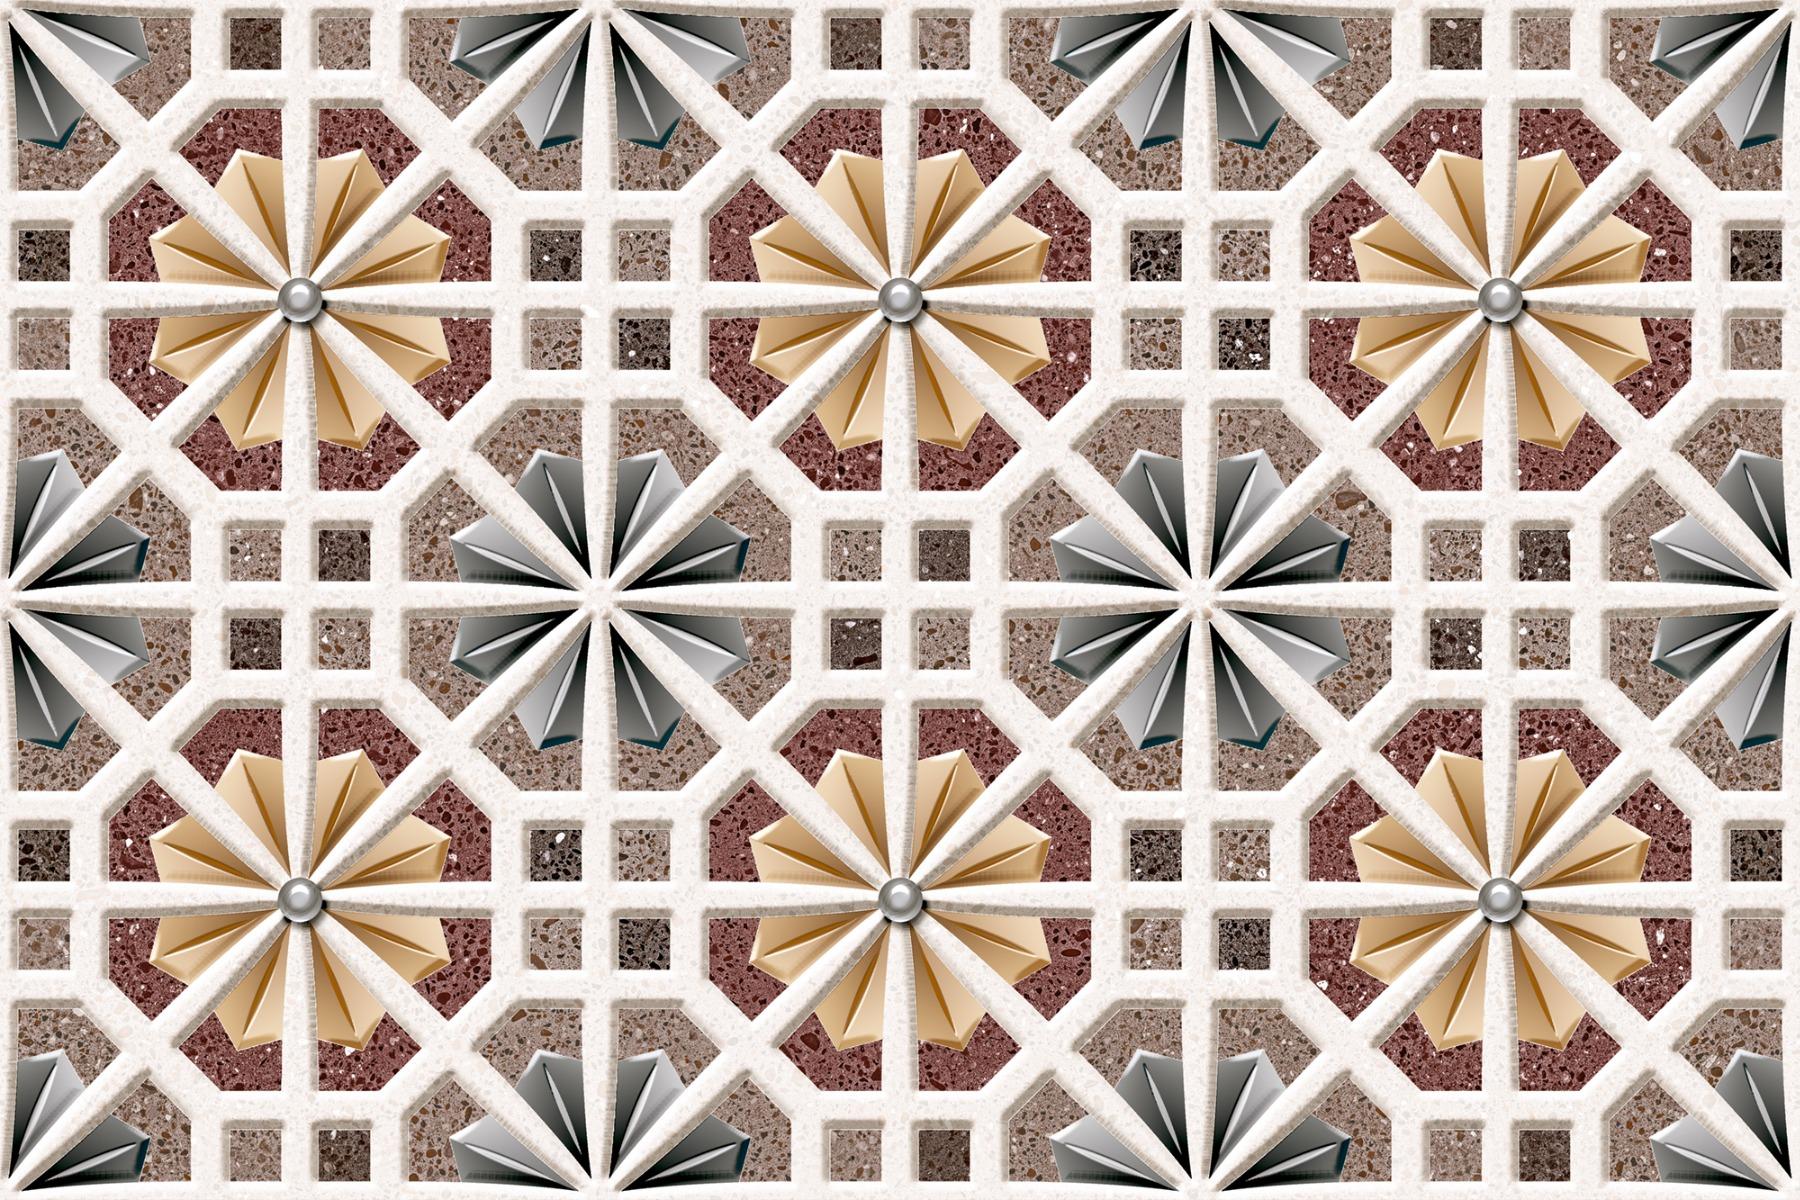 Brown Tiles for Bathroom Tiles, Kitchen Tiles, Balcony Tiles